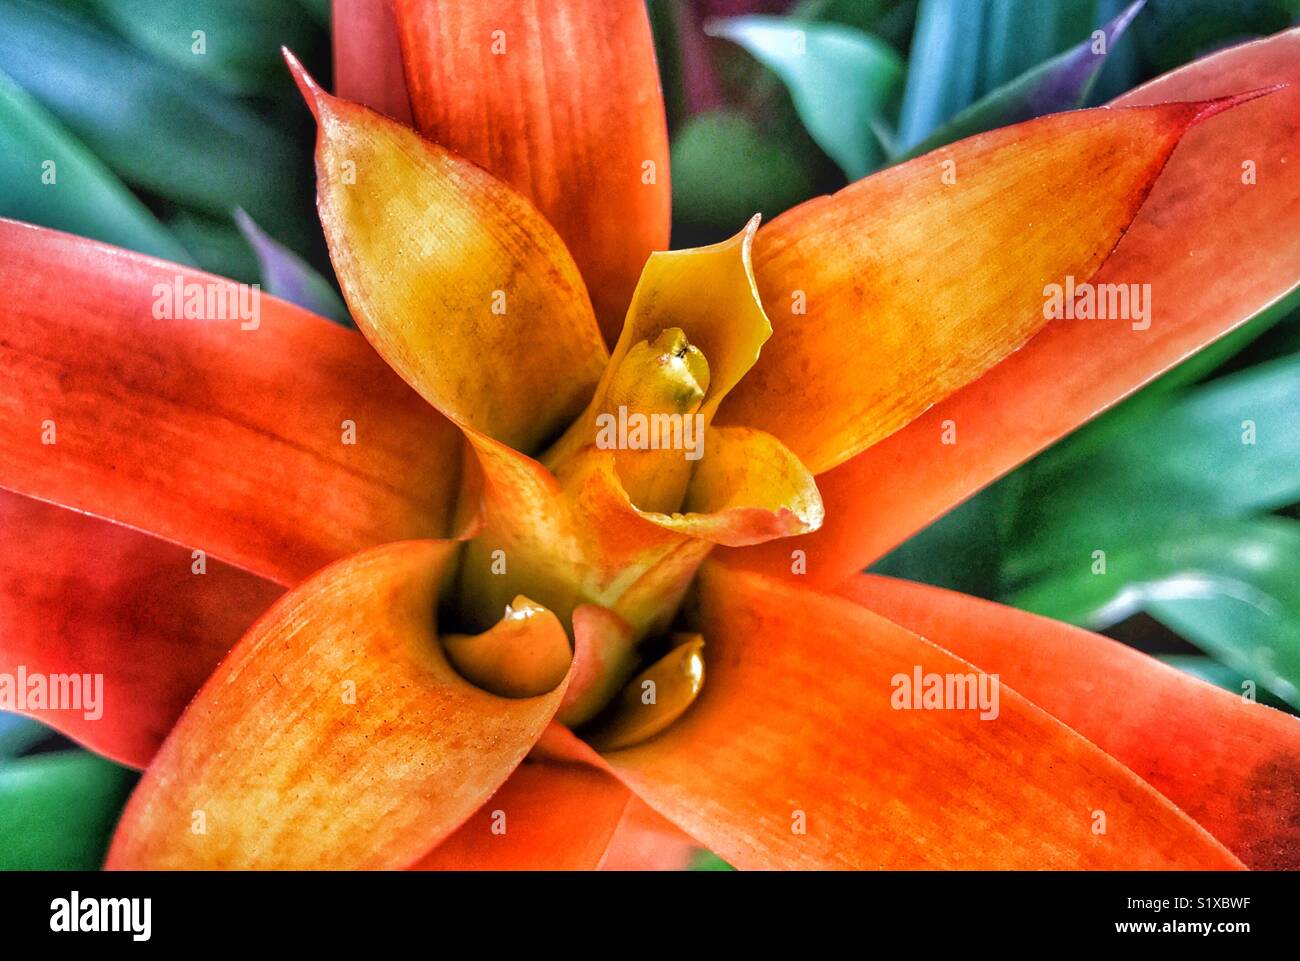 Orange and yellow bromeliad plant, Guzmania Marcella Stock Photo